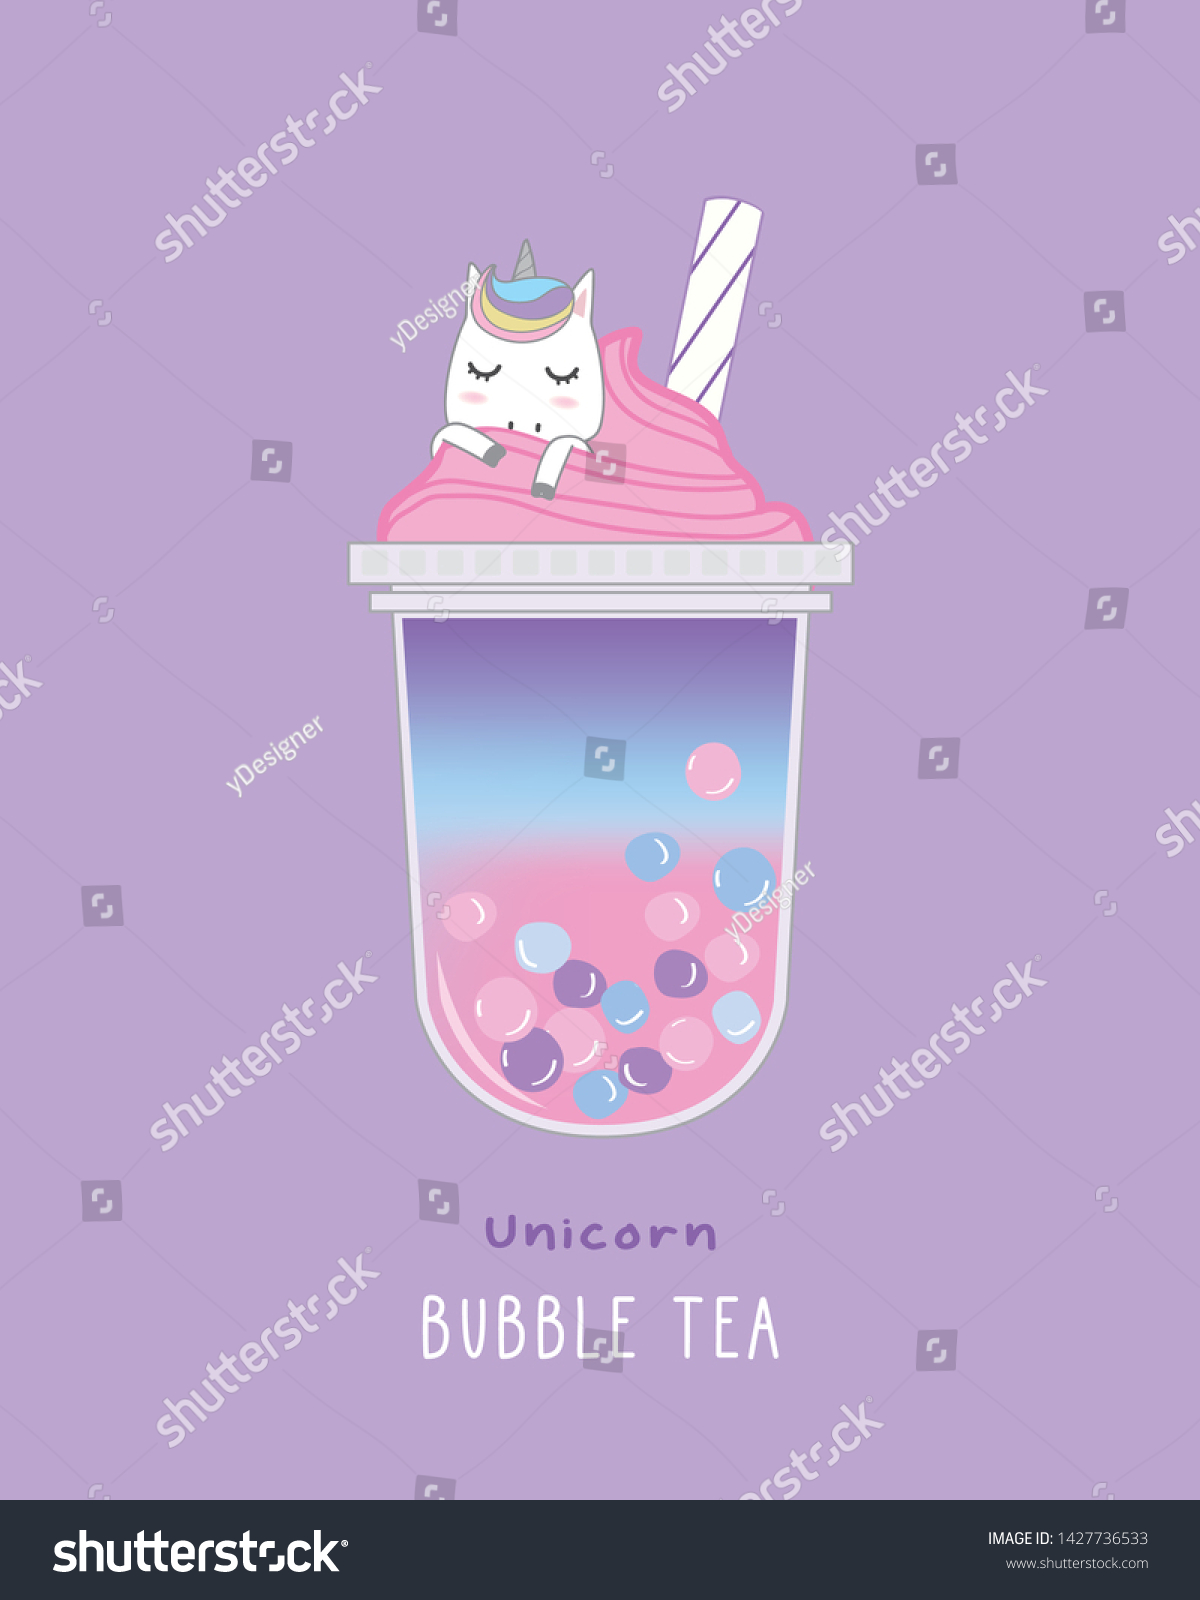 Unicorn Bubble Tea Cute Illustration Stock Vector Royalty Free 1427736533